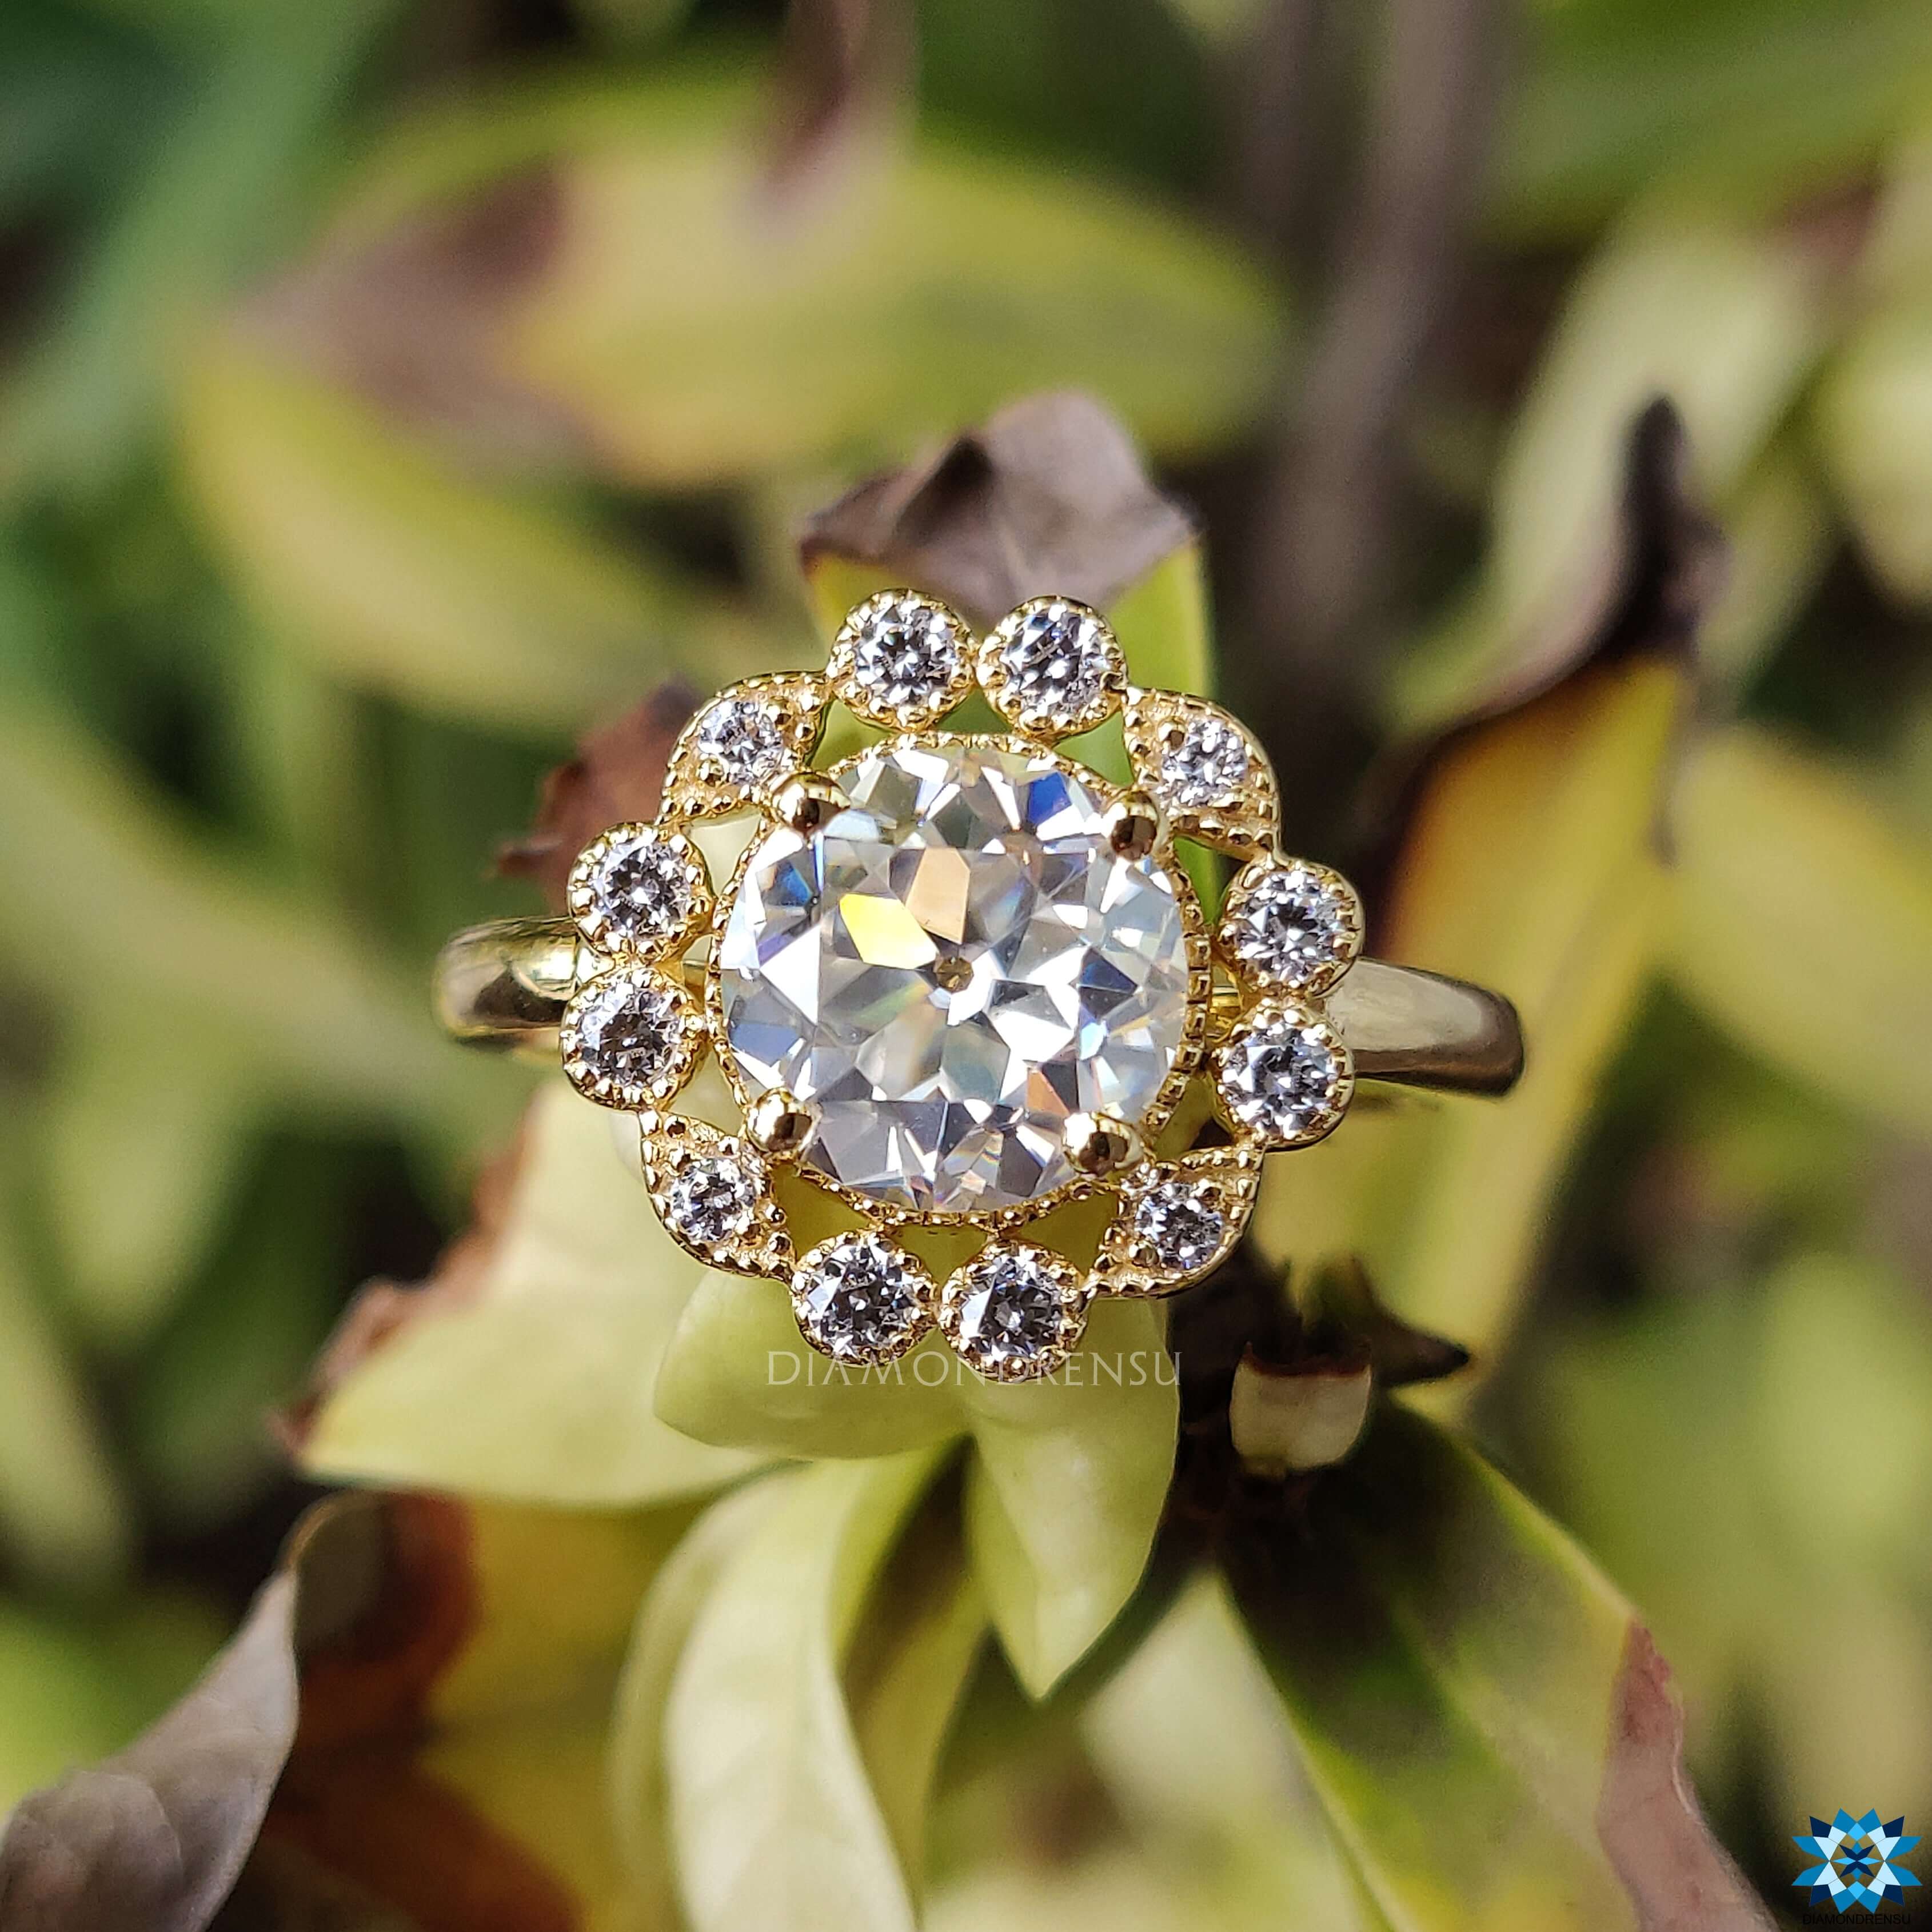 1/2 0.5 Carat 3 Three Stone Princess Diamond Engagement Ring 14K White Gold  I-J Color I1-I2 Clarity | Amazon.com